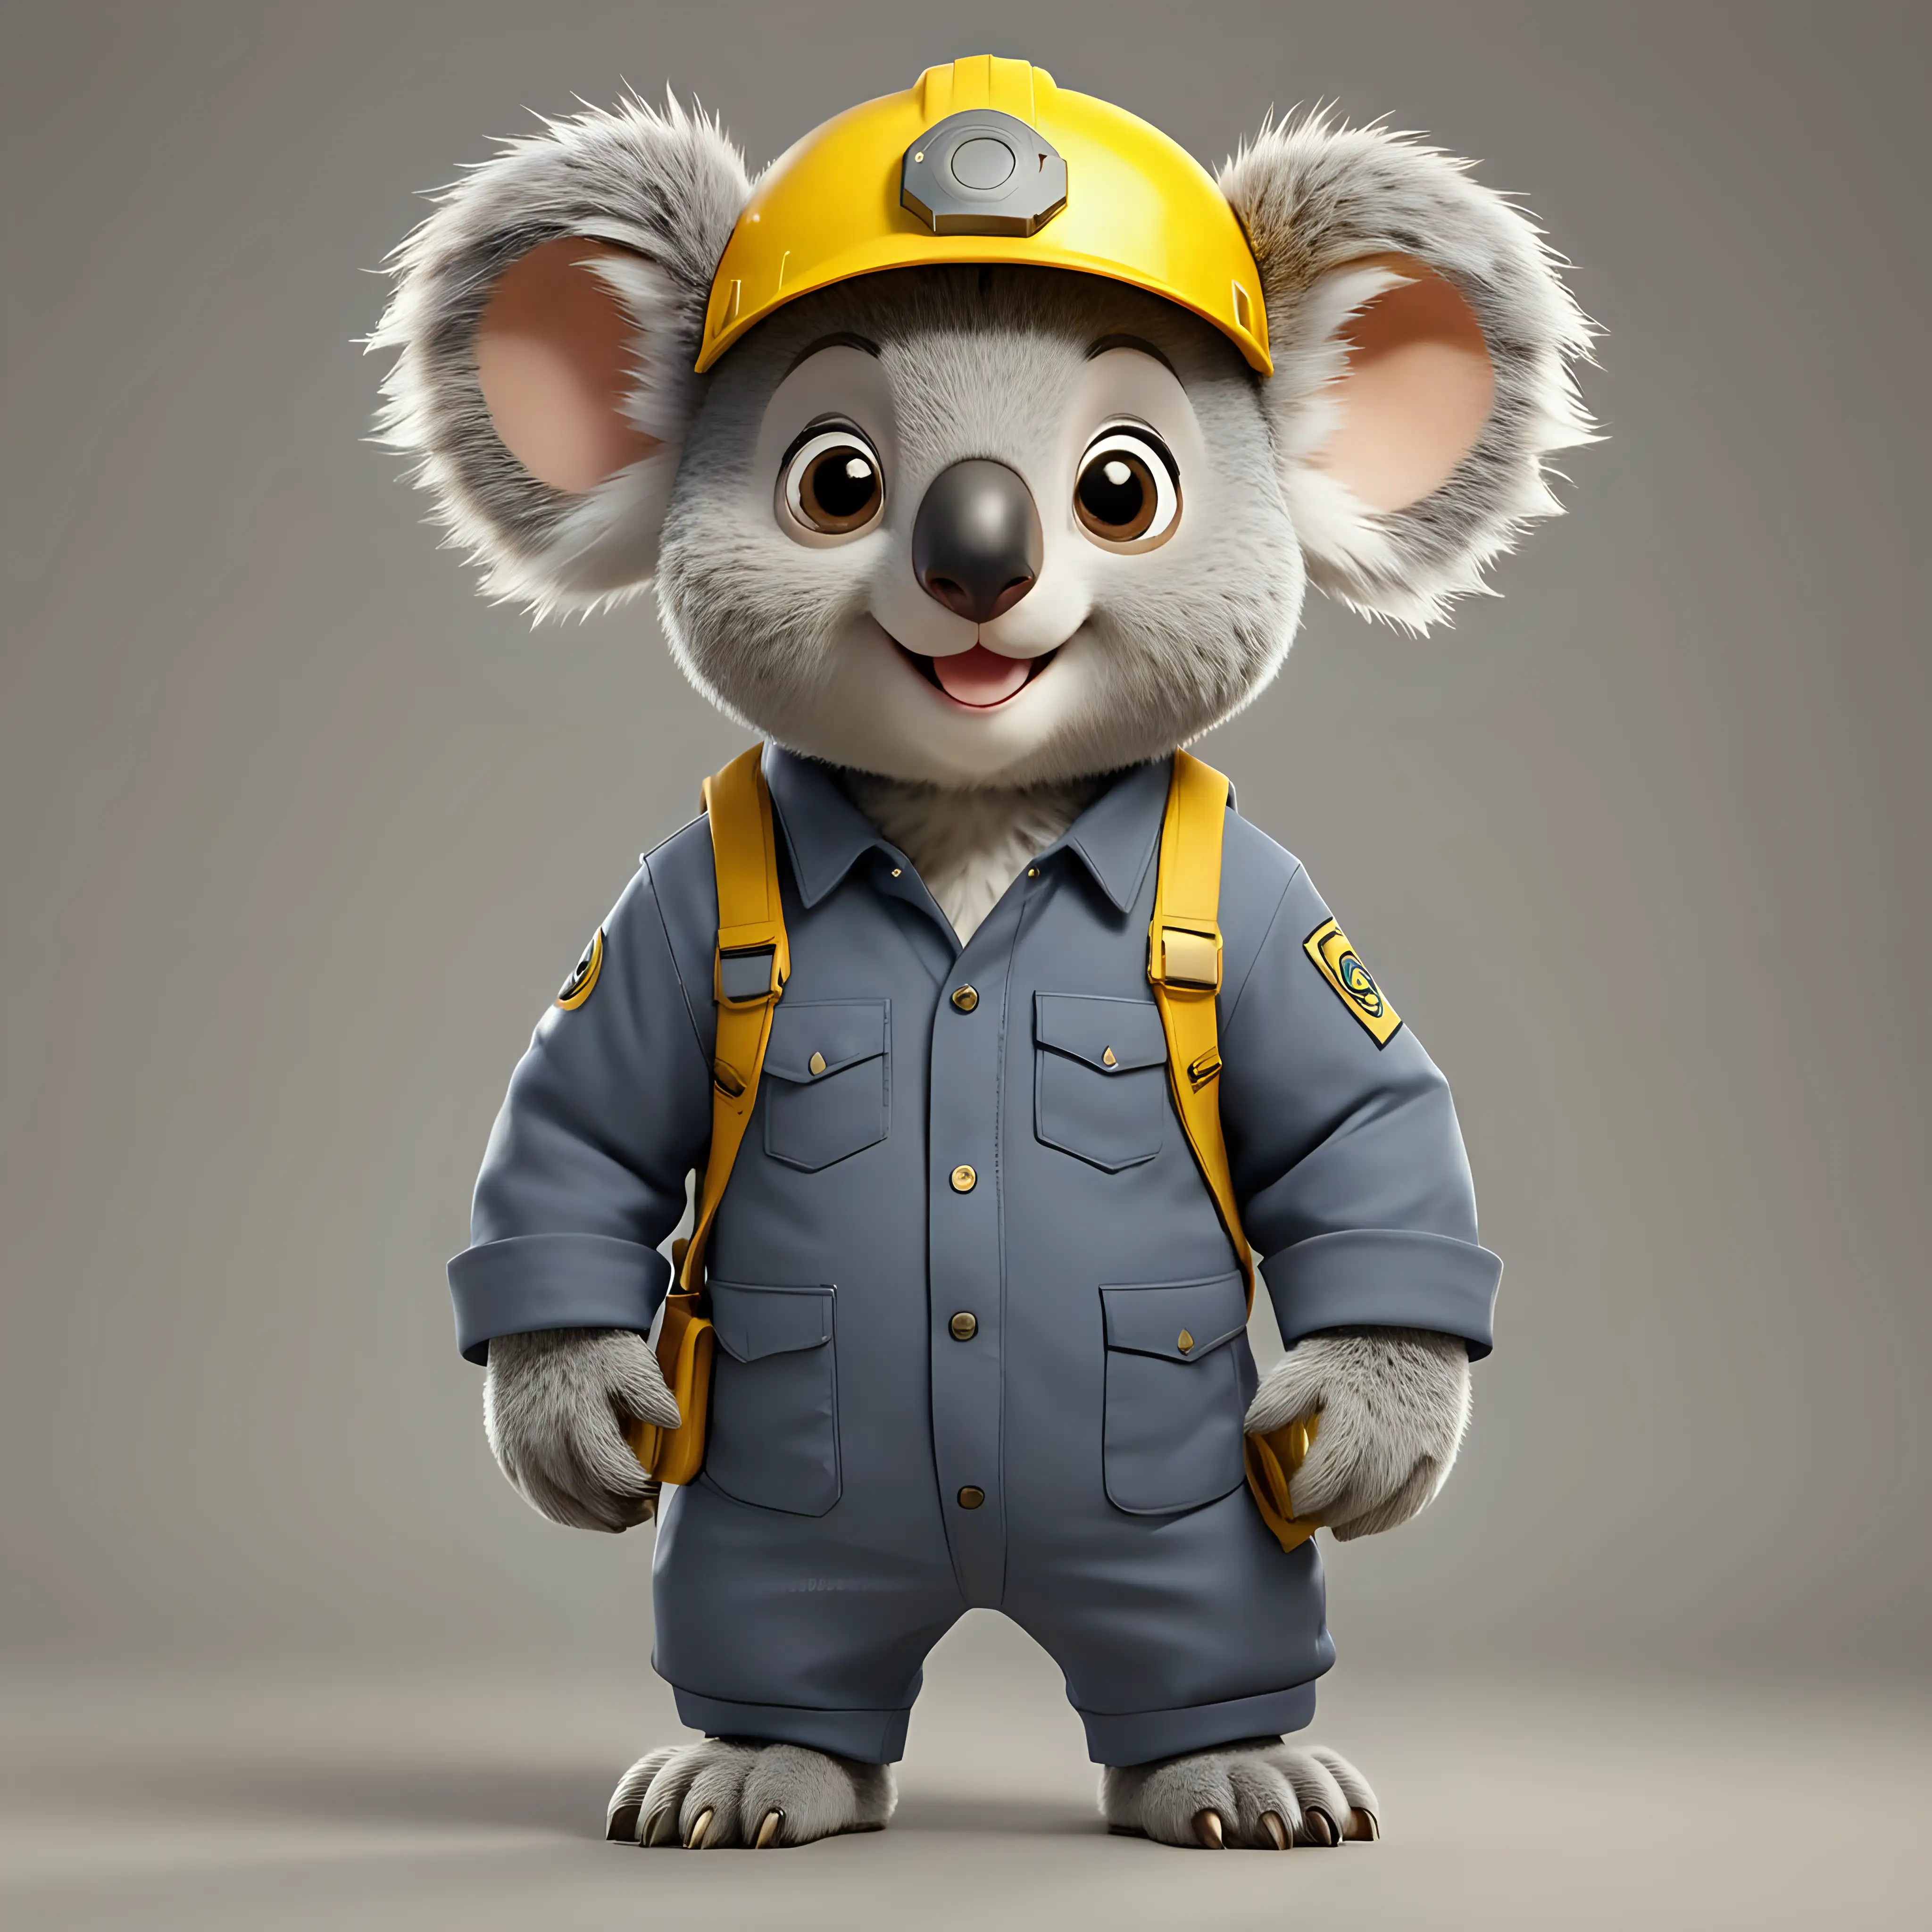 Cheerful Cartoon Koala Engineer with Yellow Helmet on Clear Background